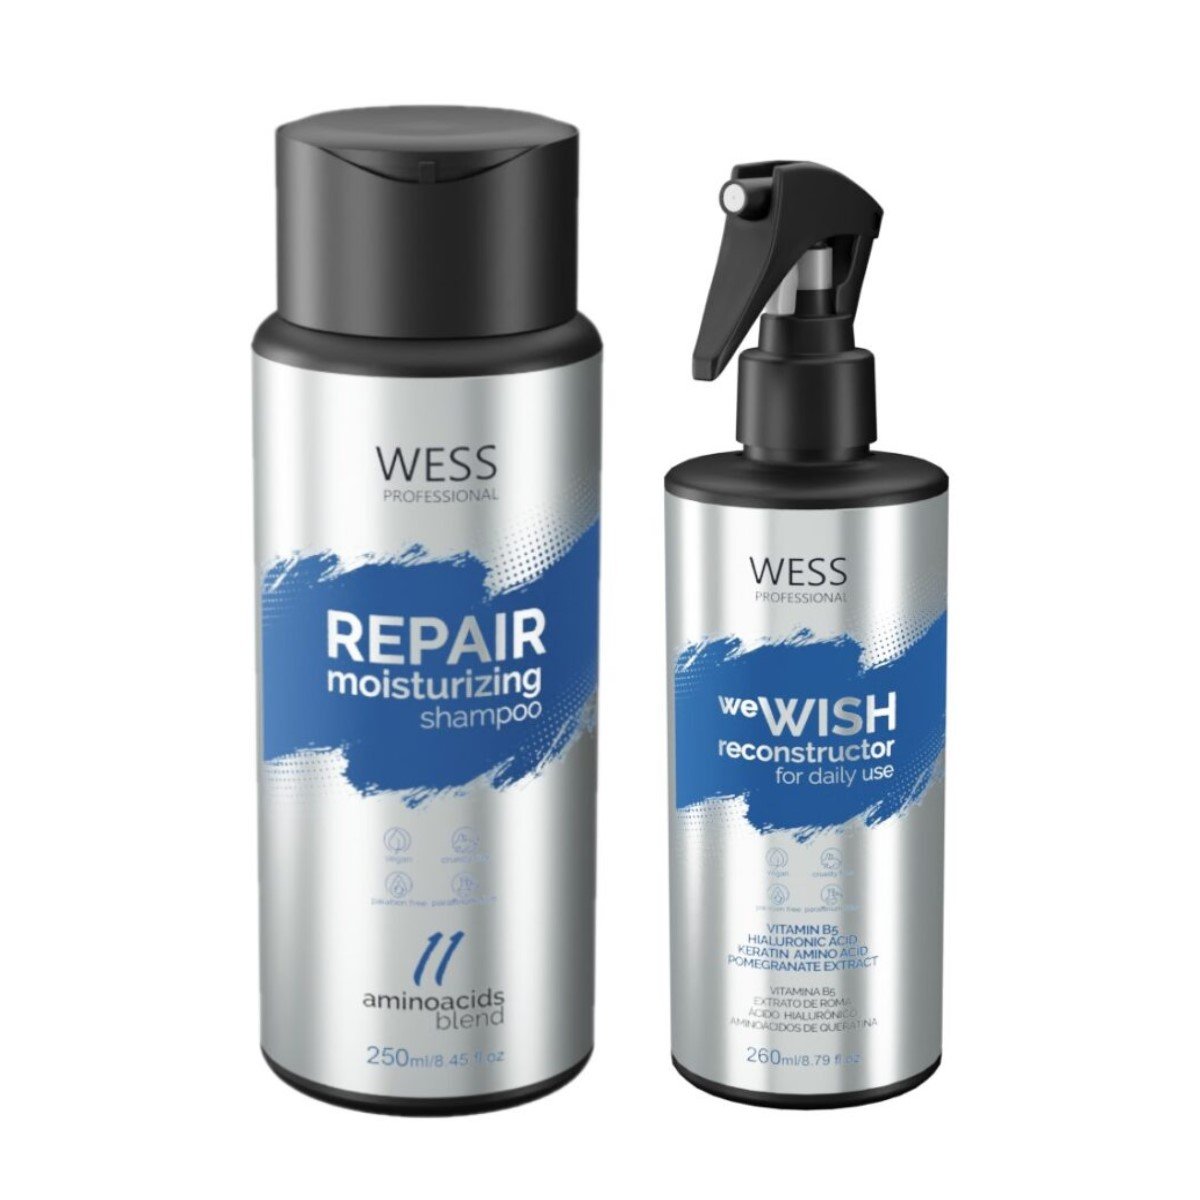 Kit Wess Repair Shampoo 250ml + We Wish Reconstrutor 260ml ÚNICO 1